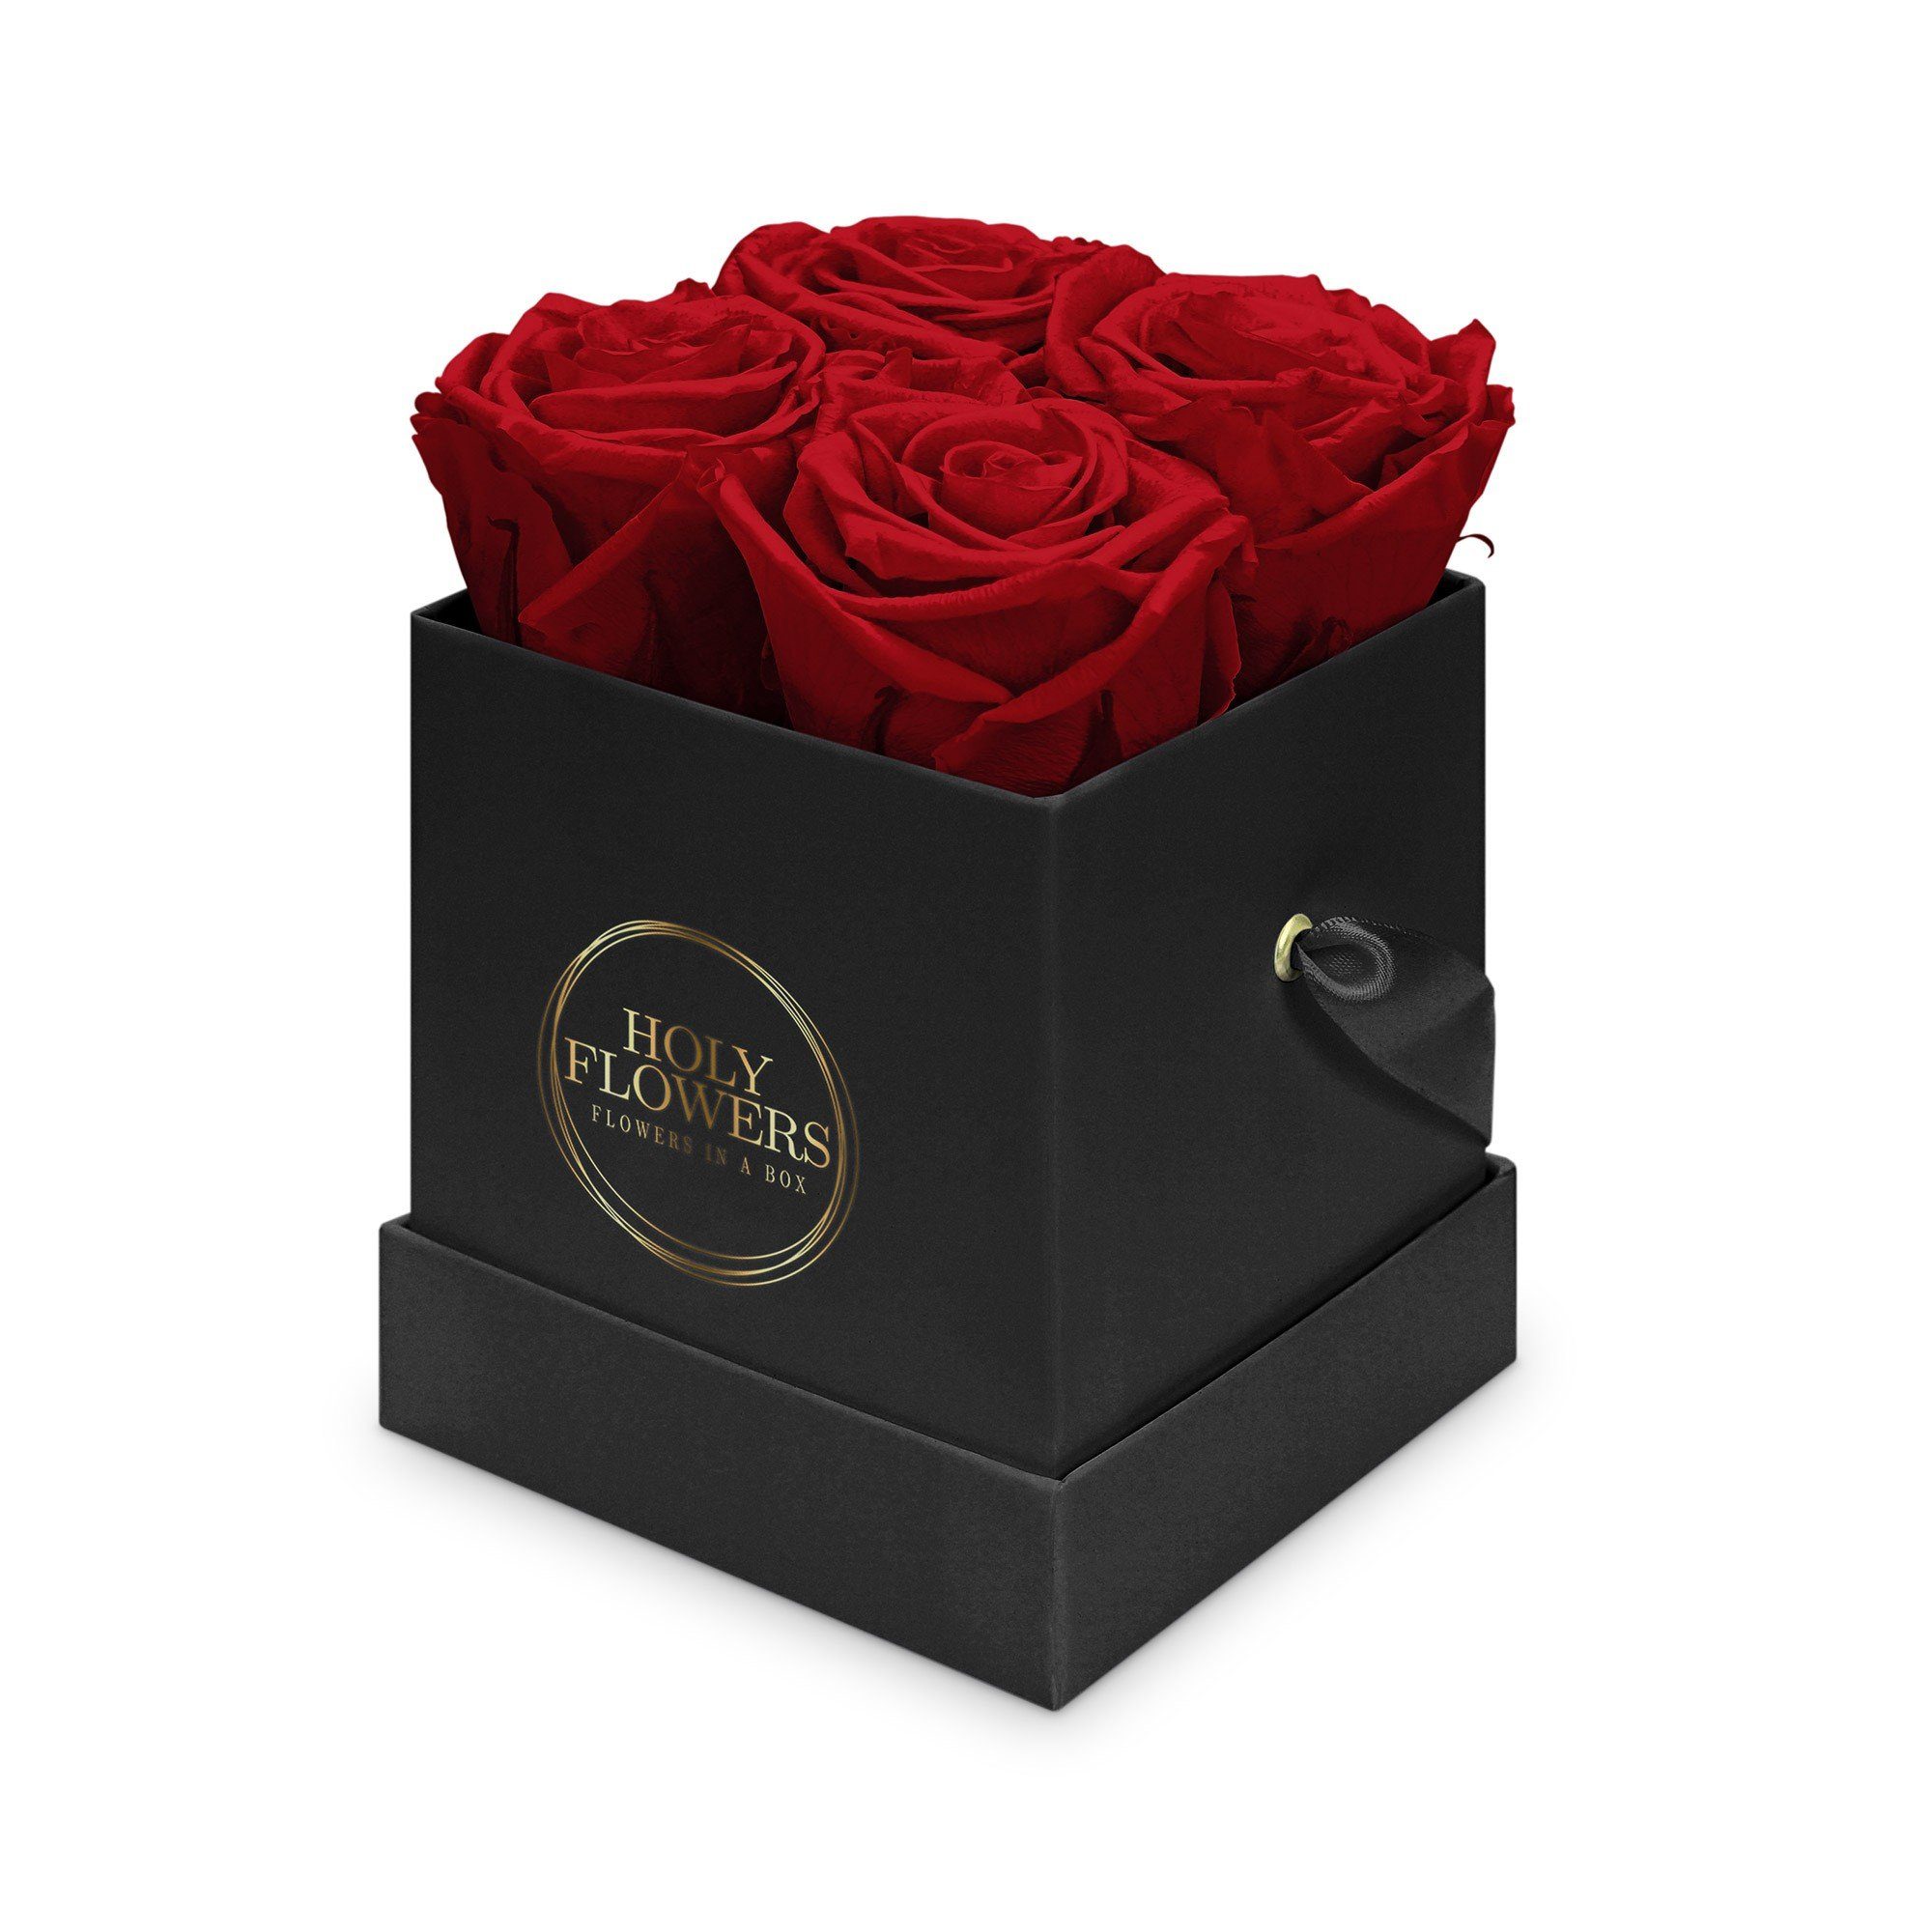 Kunstblume Eckige Rosenbox in schwarz mit 4 Infinity Rosen I 3 Jahre haltbar I Echte, duftende konservierte Blumen I by Raul Richter Infinity Rose, Holy Flowers, Höhe 11 cm Heritage Red